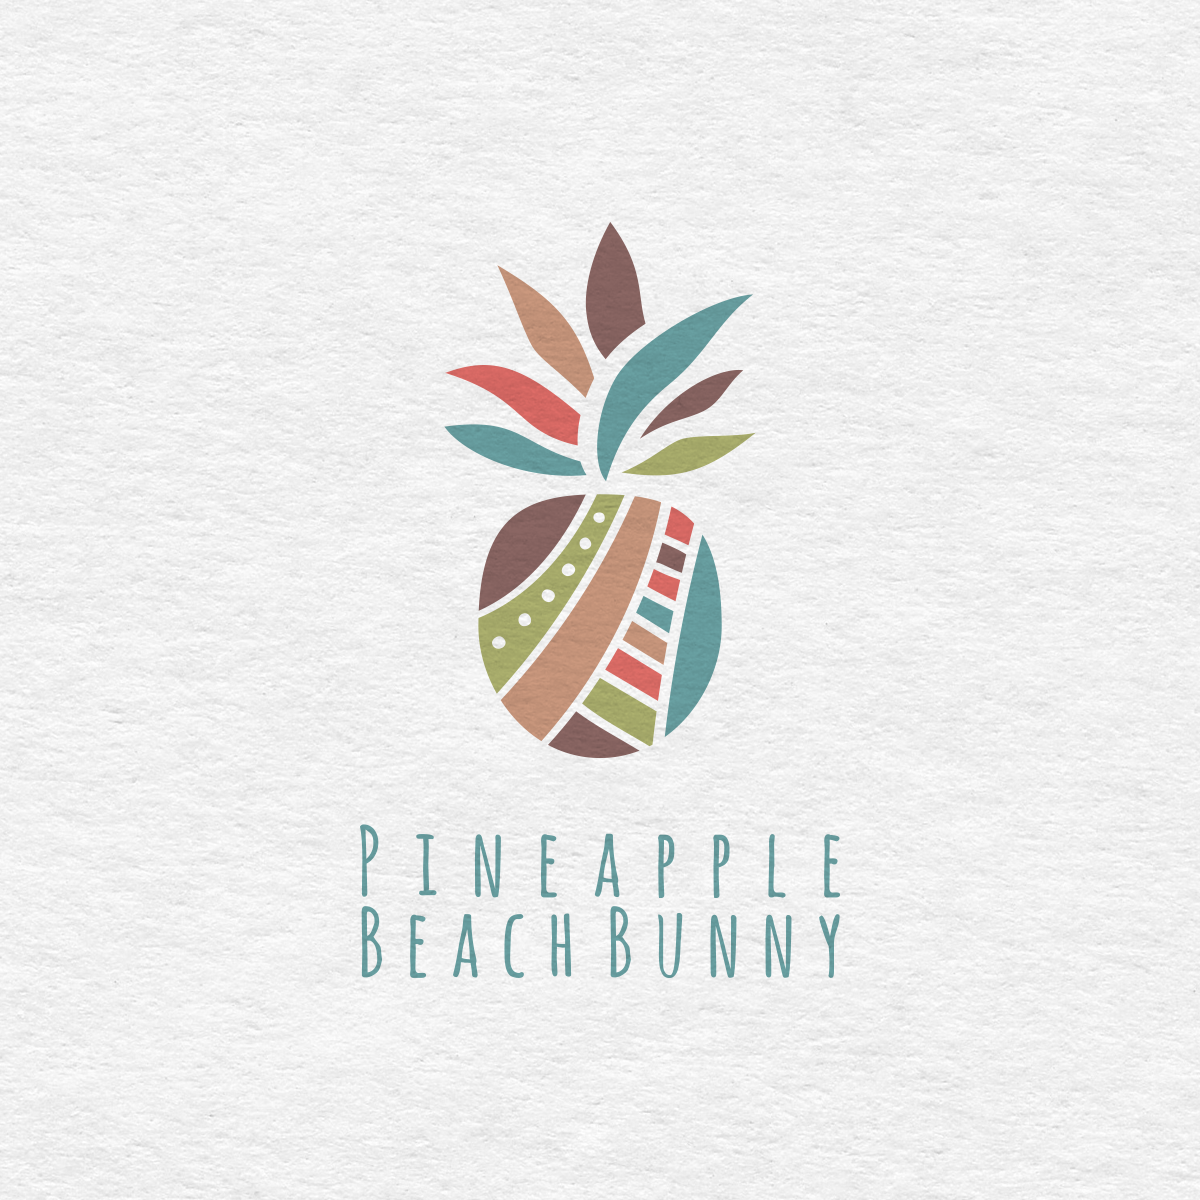 Pineapple Beach Bunny